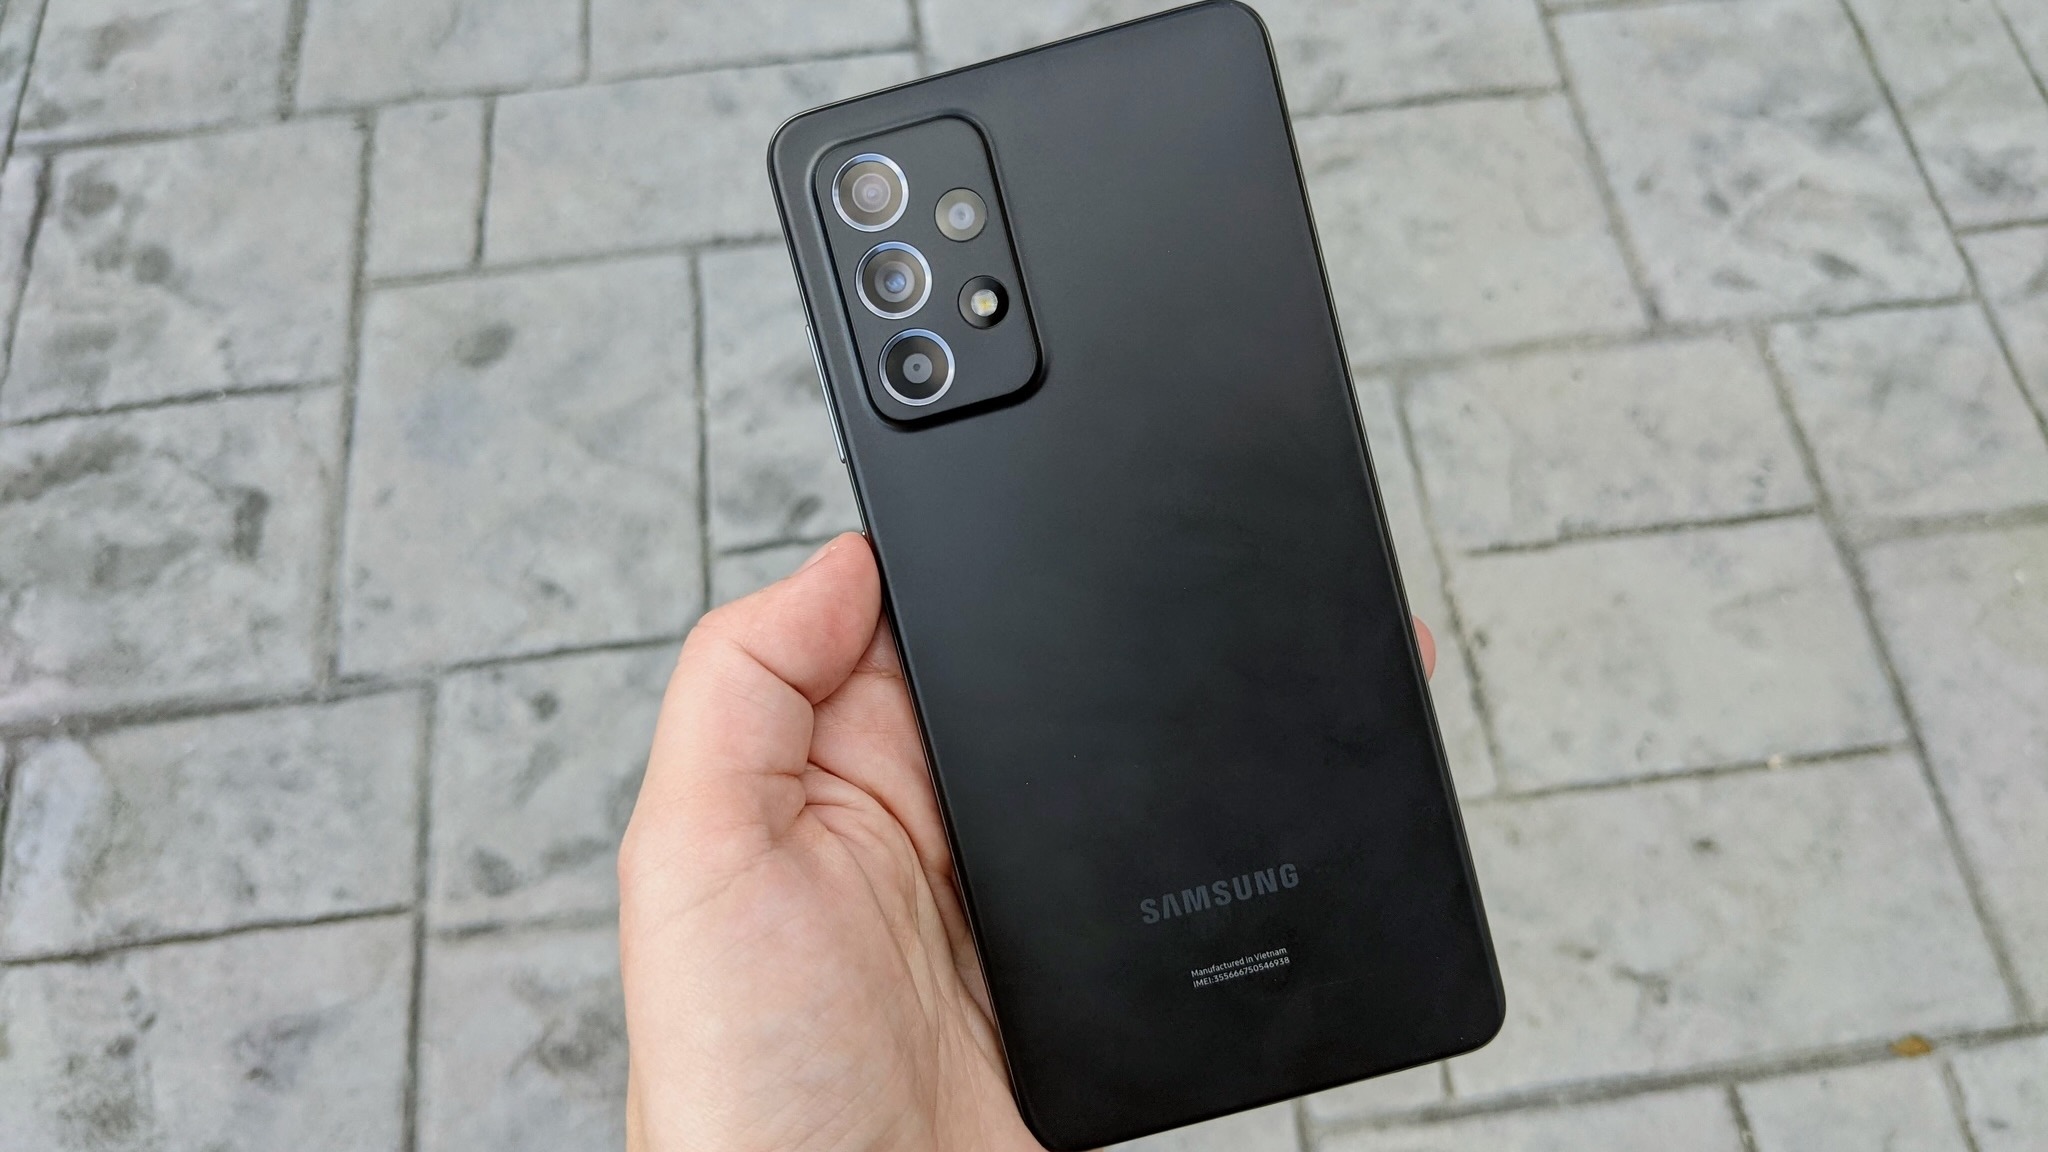 OtterBox Commuter Lite Case for Samsung Galaxy A52 5G - BLACK.